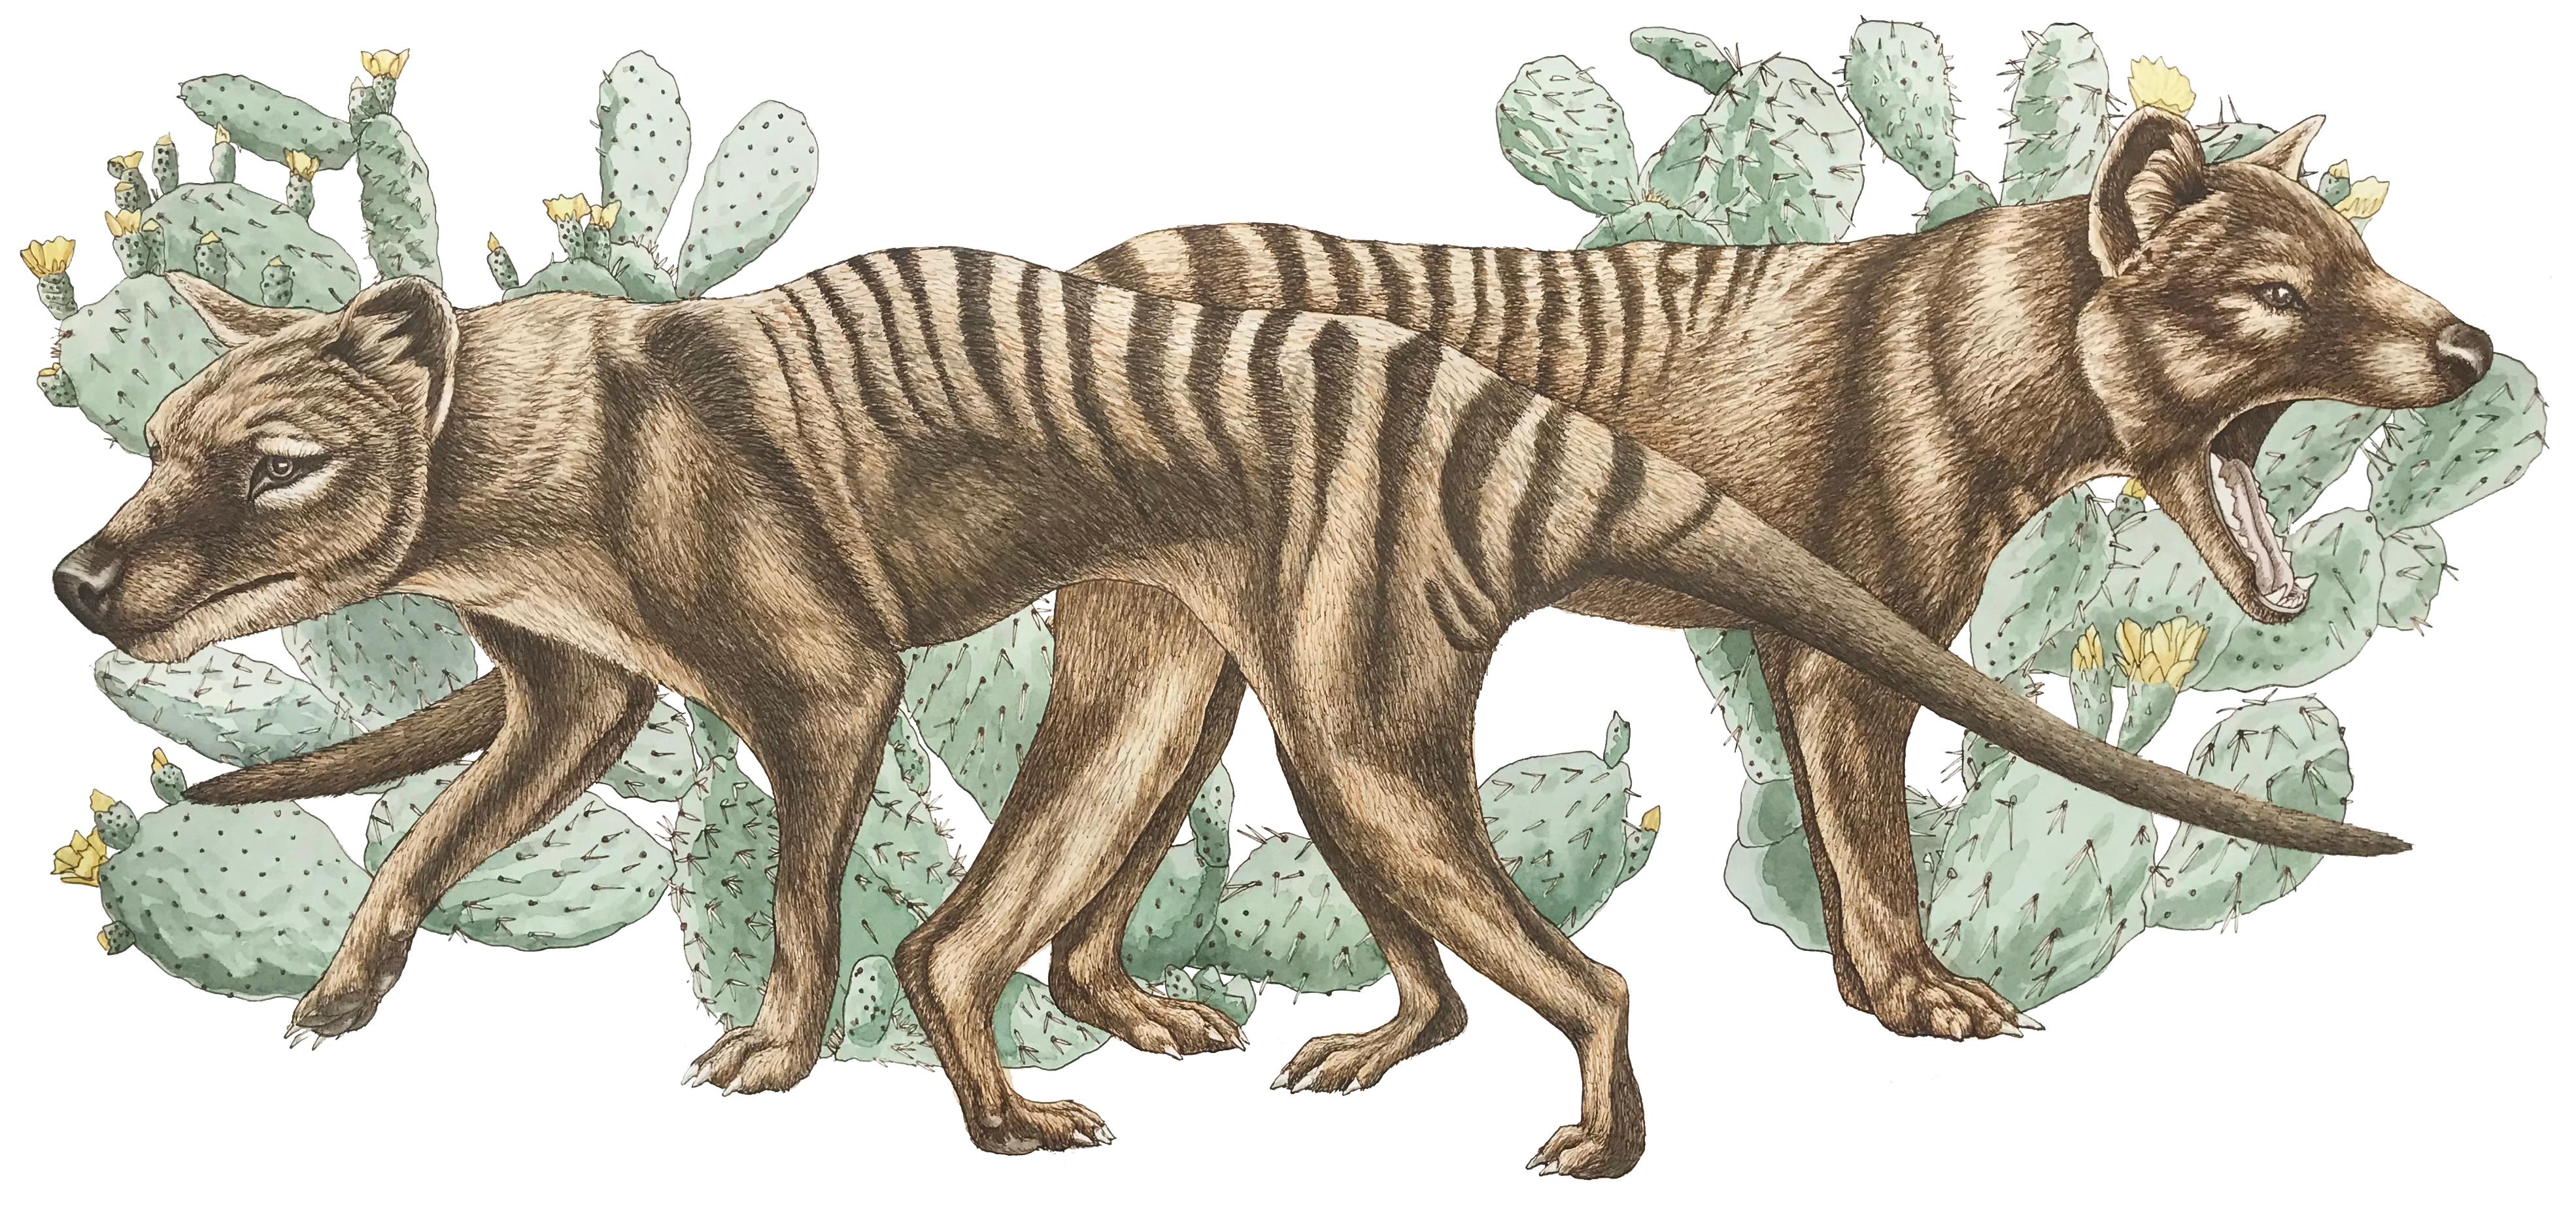 Animal Art Emily White - Thylacines avec cacti poire piquée